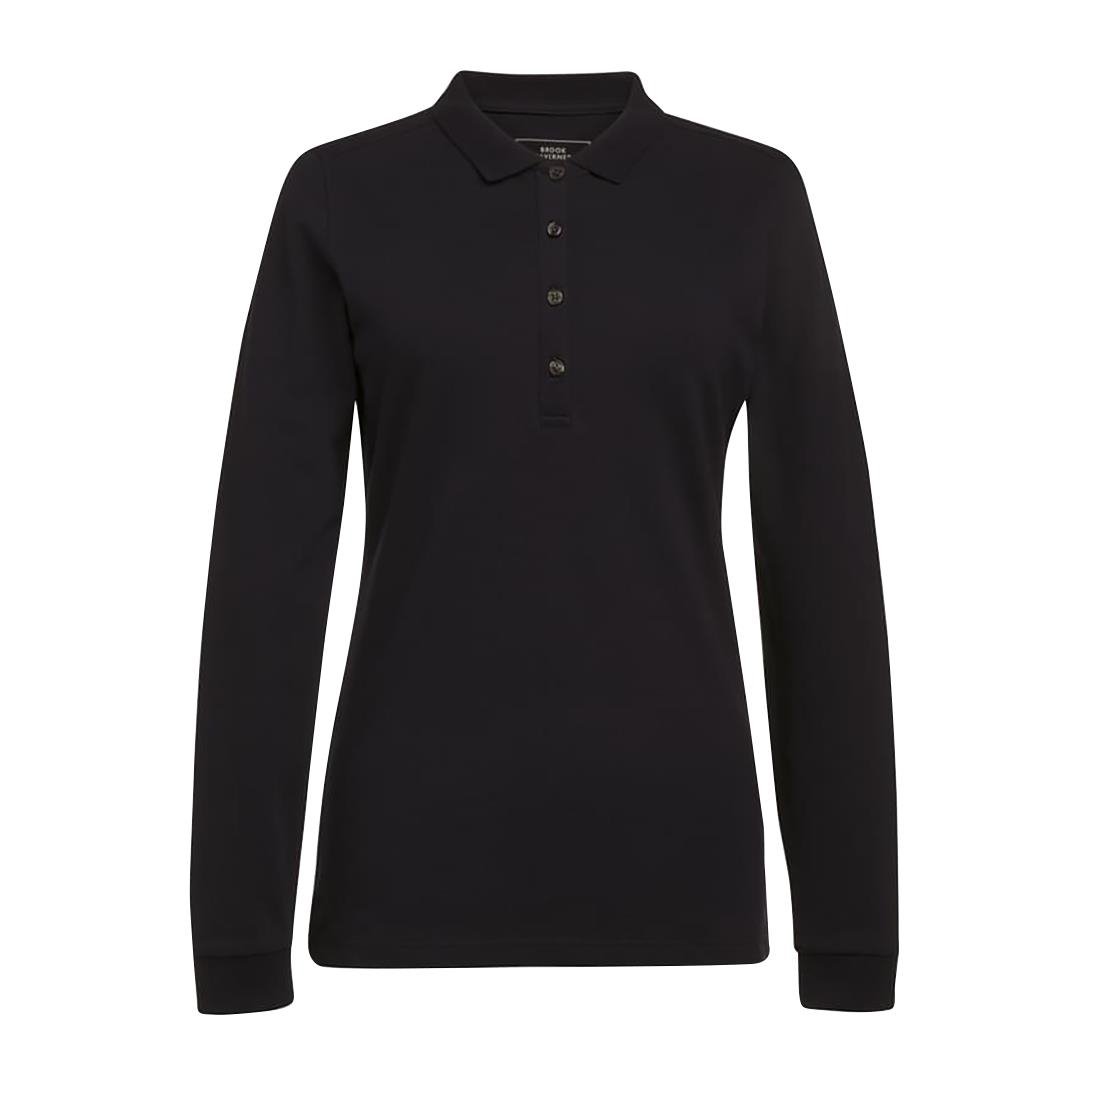 BA009-S Brook Taverner Anna Womens Long Sleeve Polo Shirt Black Size S